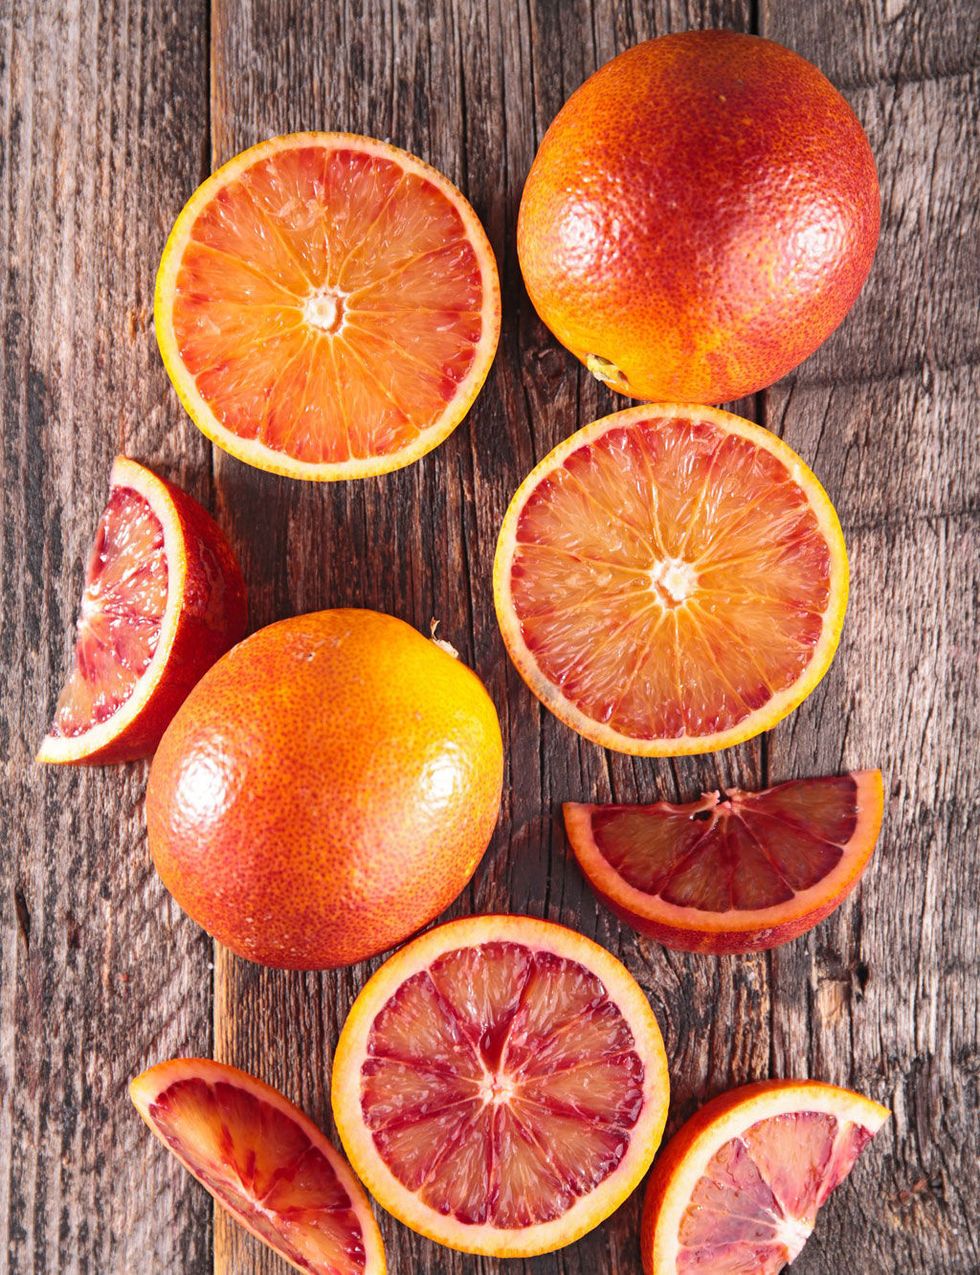 Citrus, Clementine, Rangpur, Fruit, Food, Orange, Mandarin orange, Tangelo, Grapefruit, Tangerine, 